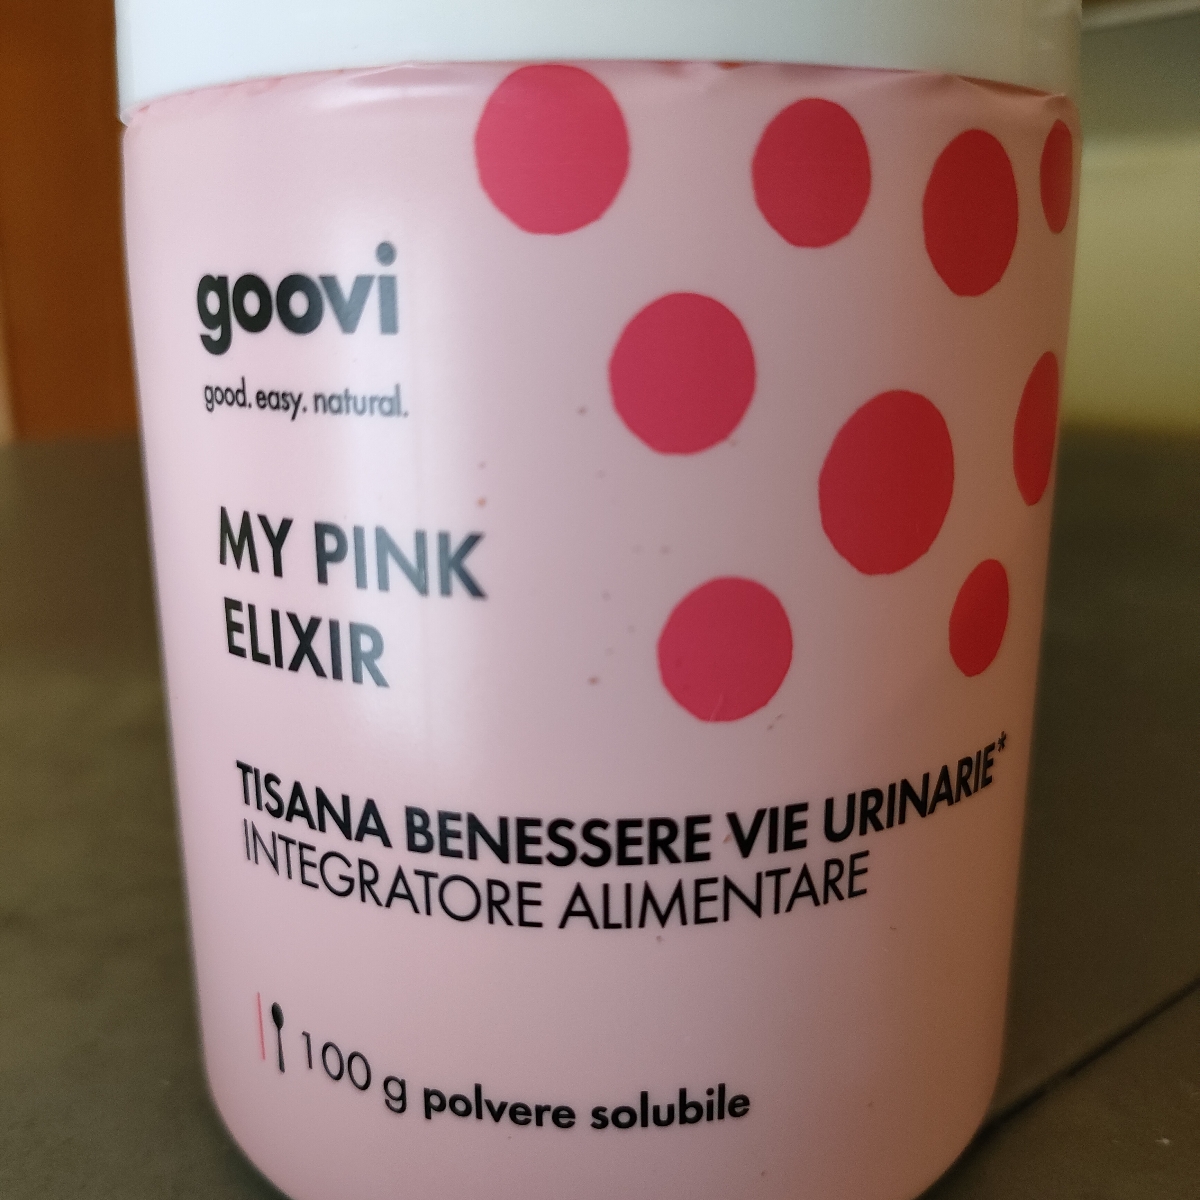 Goovi My Pink elixir tisana vie urinarie Reviews | abillion